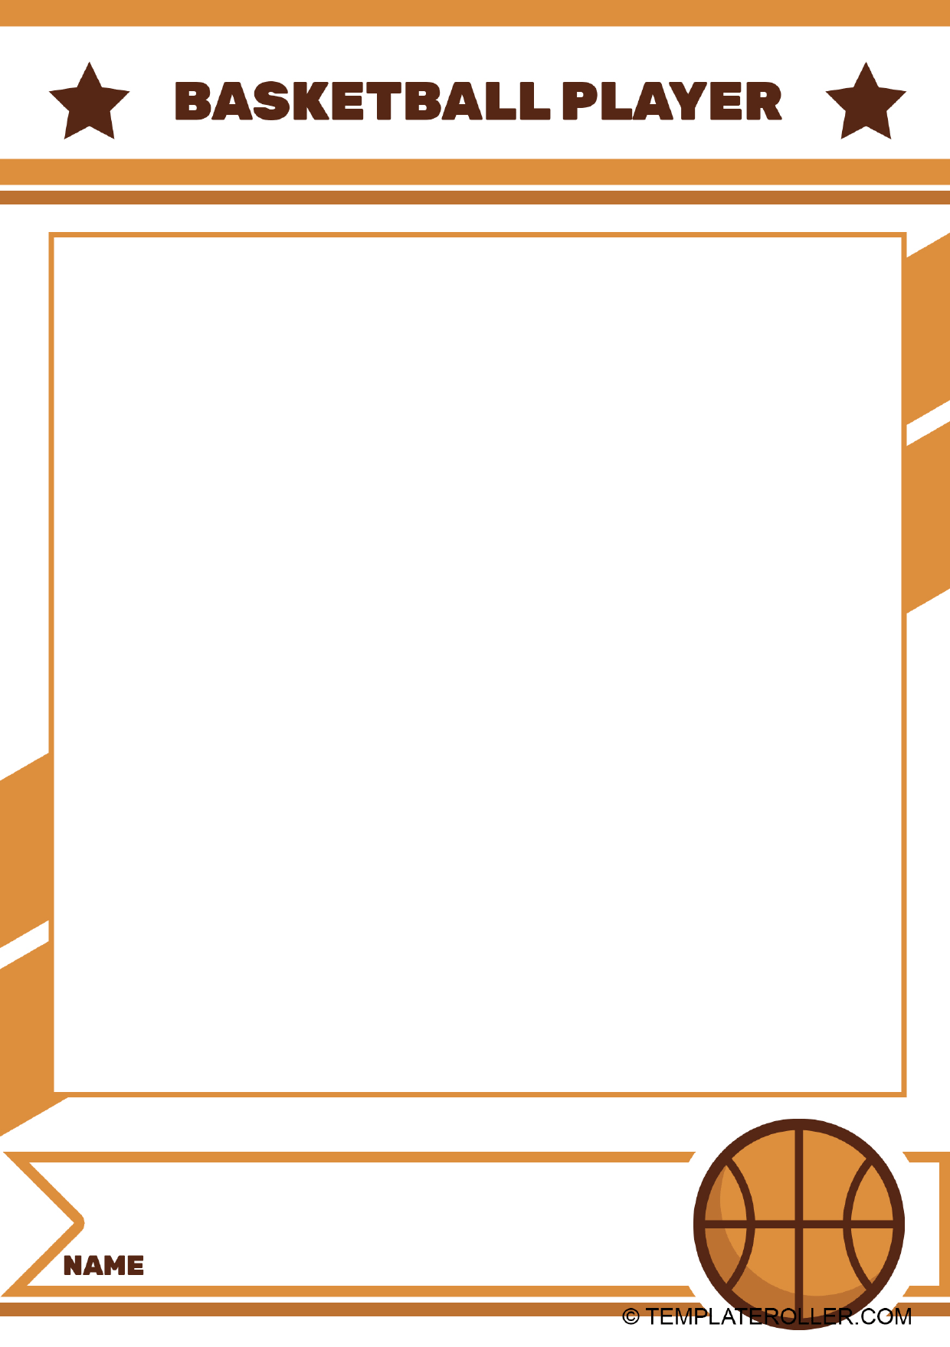 Basketball Card Template - Stars sample image